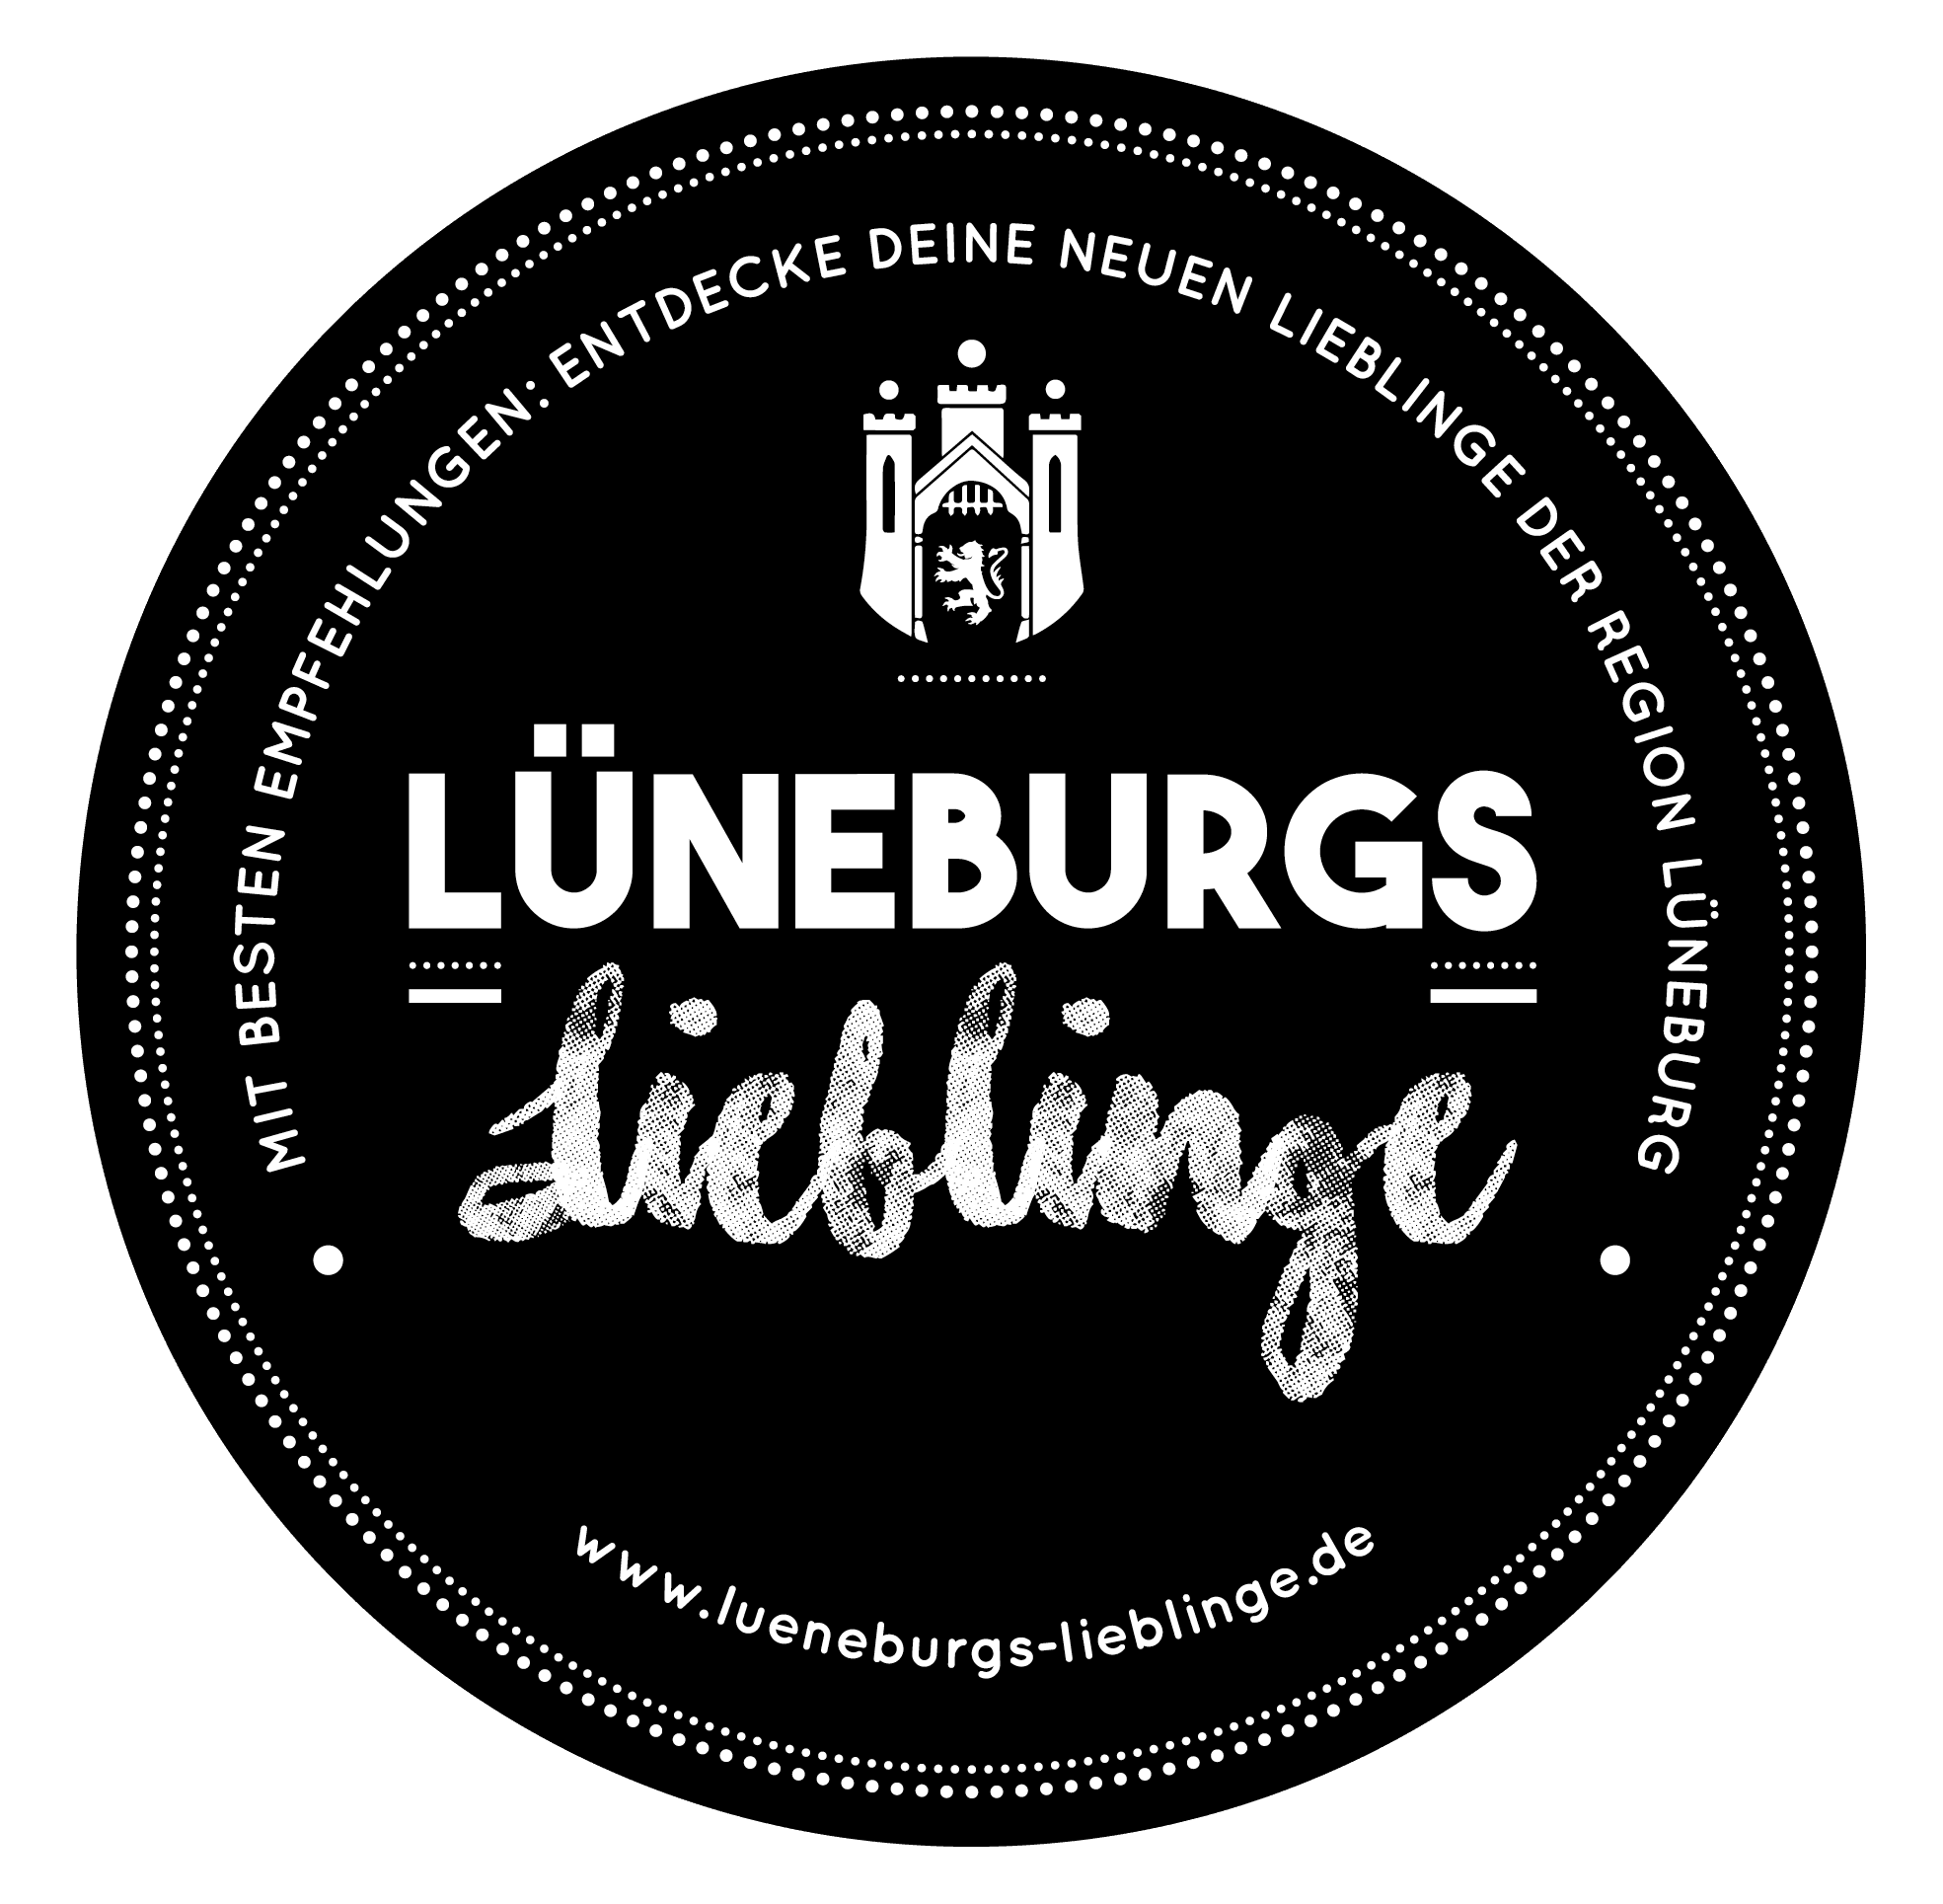 Lüneburgs Lieblinge